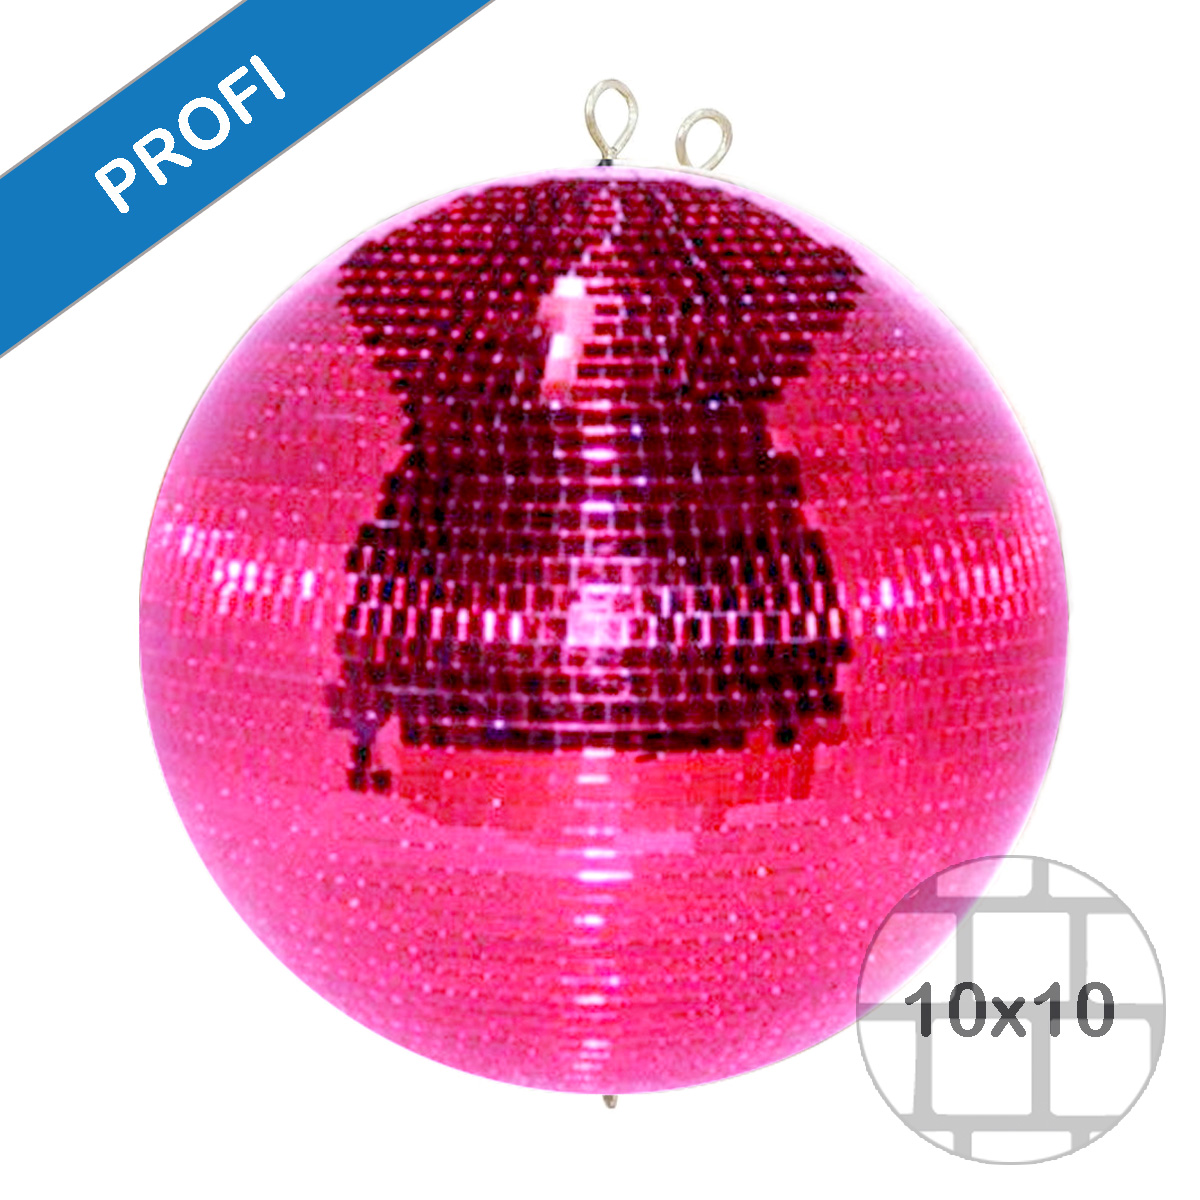 Spiegelkugel 40cm pink rosa purple- Diskokugel (Discokugel) Party Lichteffekt - Echtglas - mirrorball safety pink color